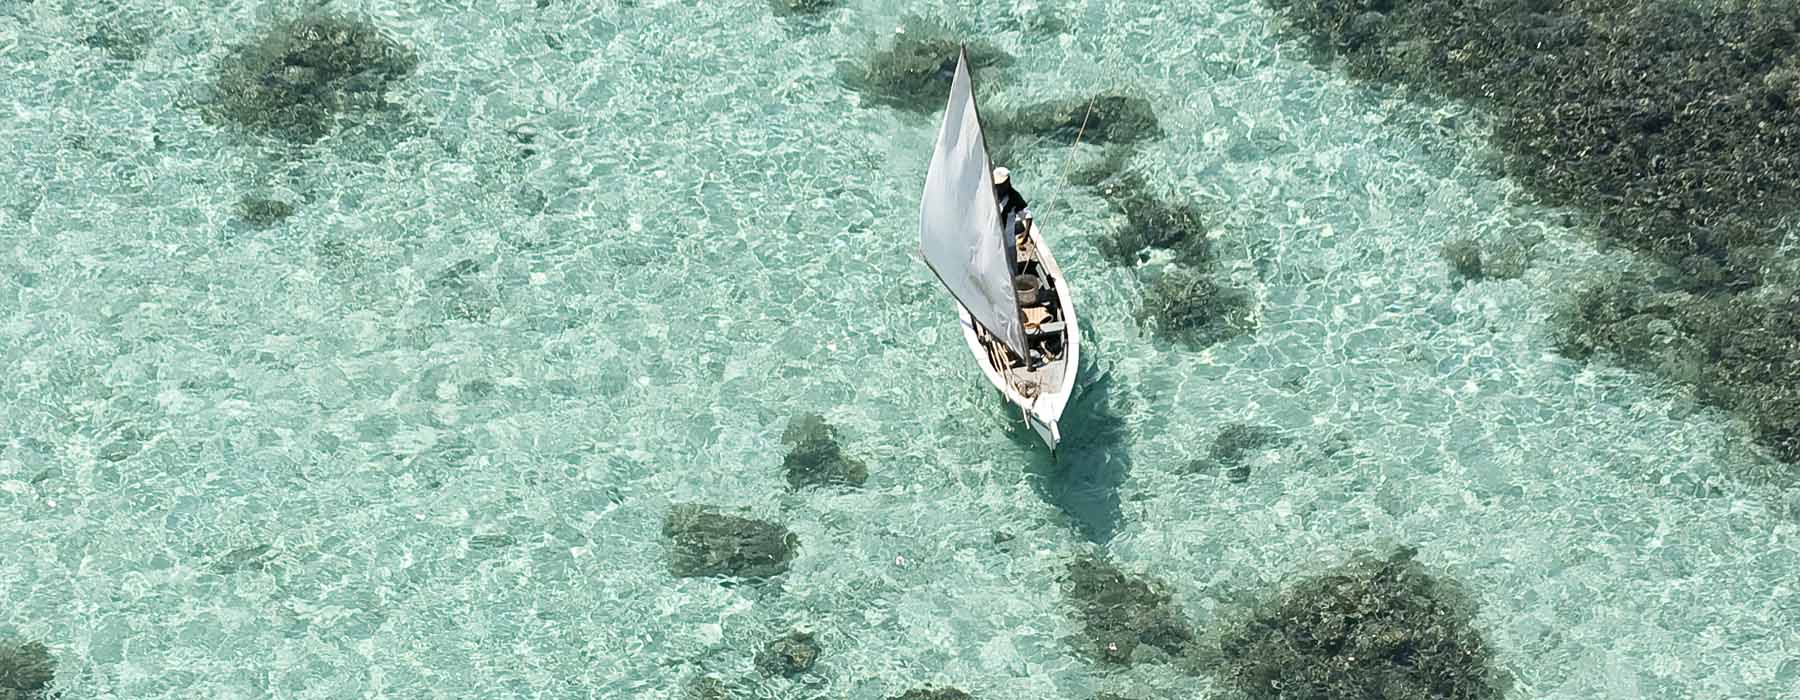 Mauritius<br class="hidden-md hidden-lg" /> Safari & Beach Holidays